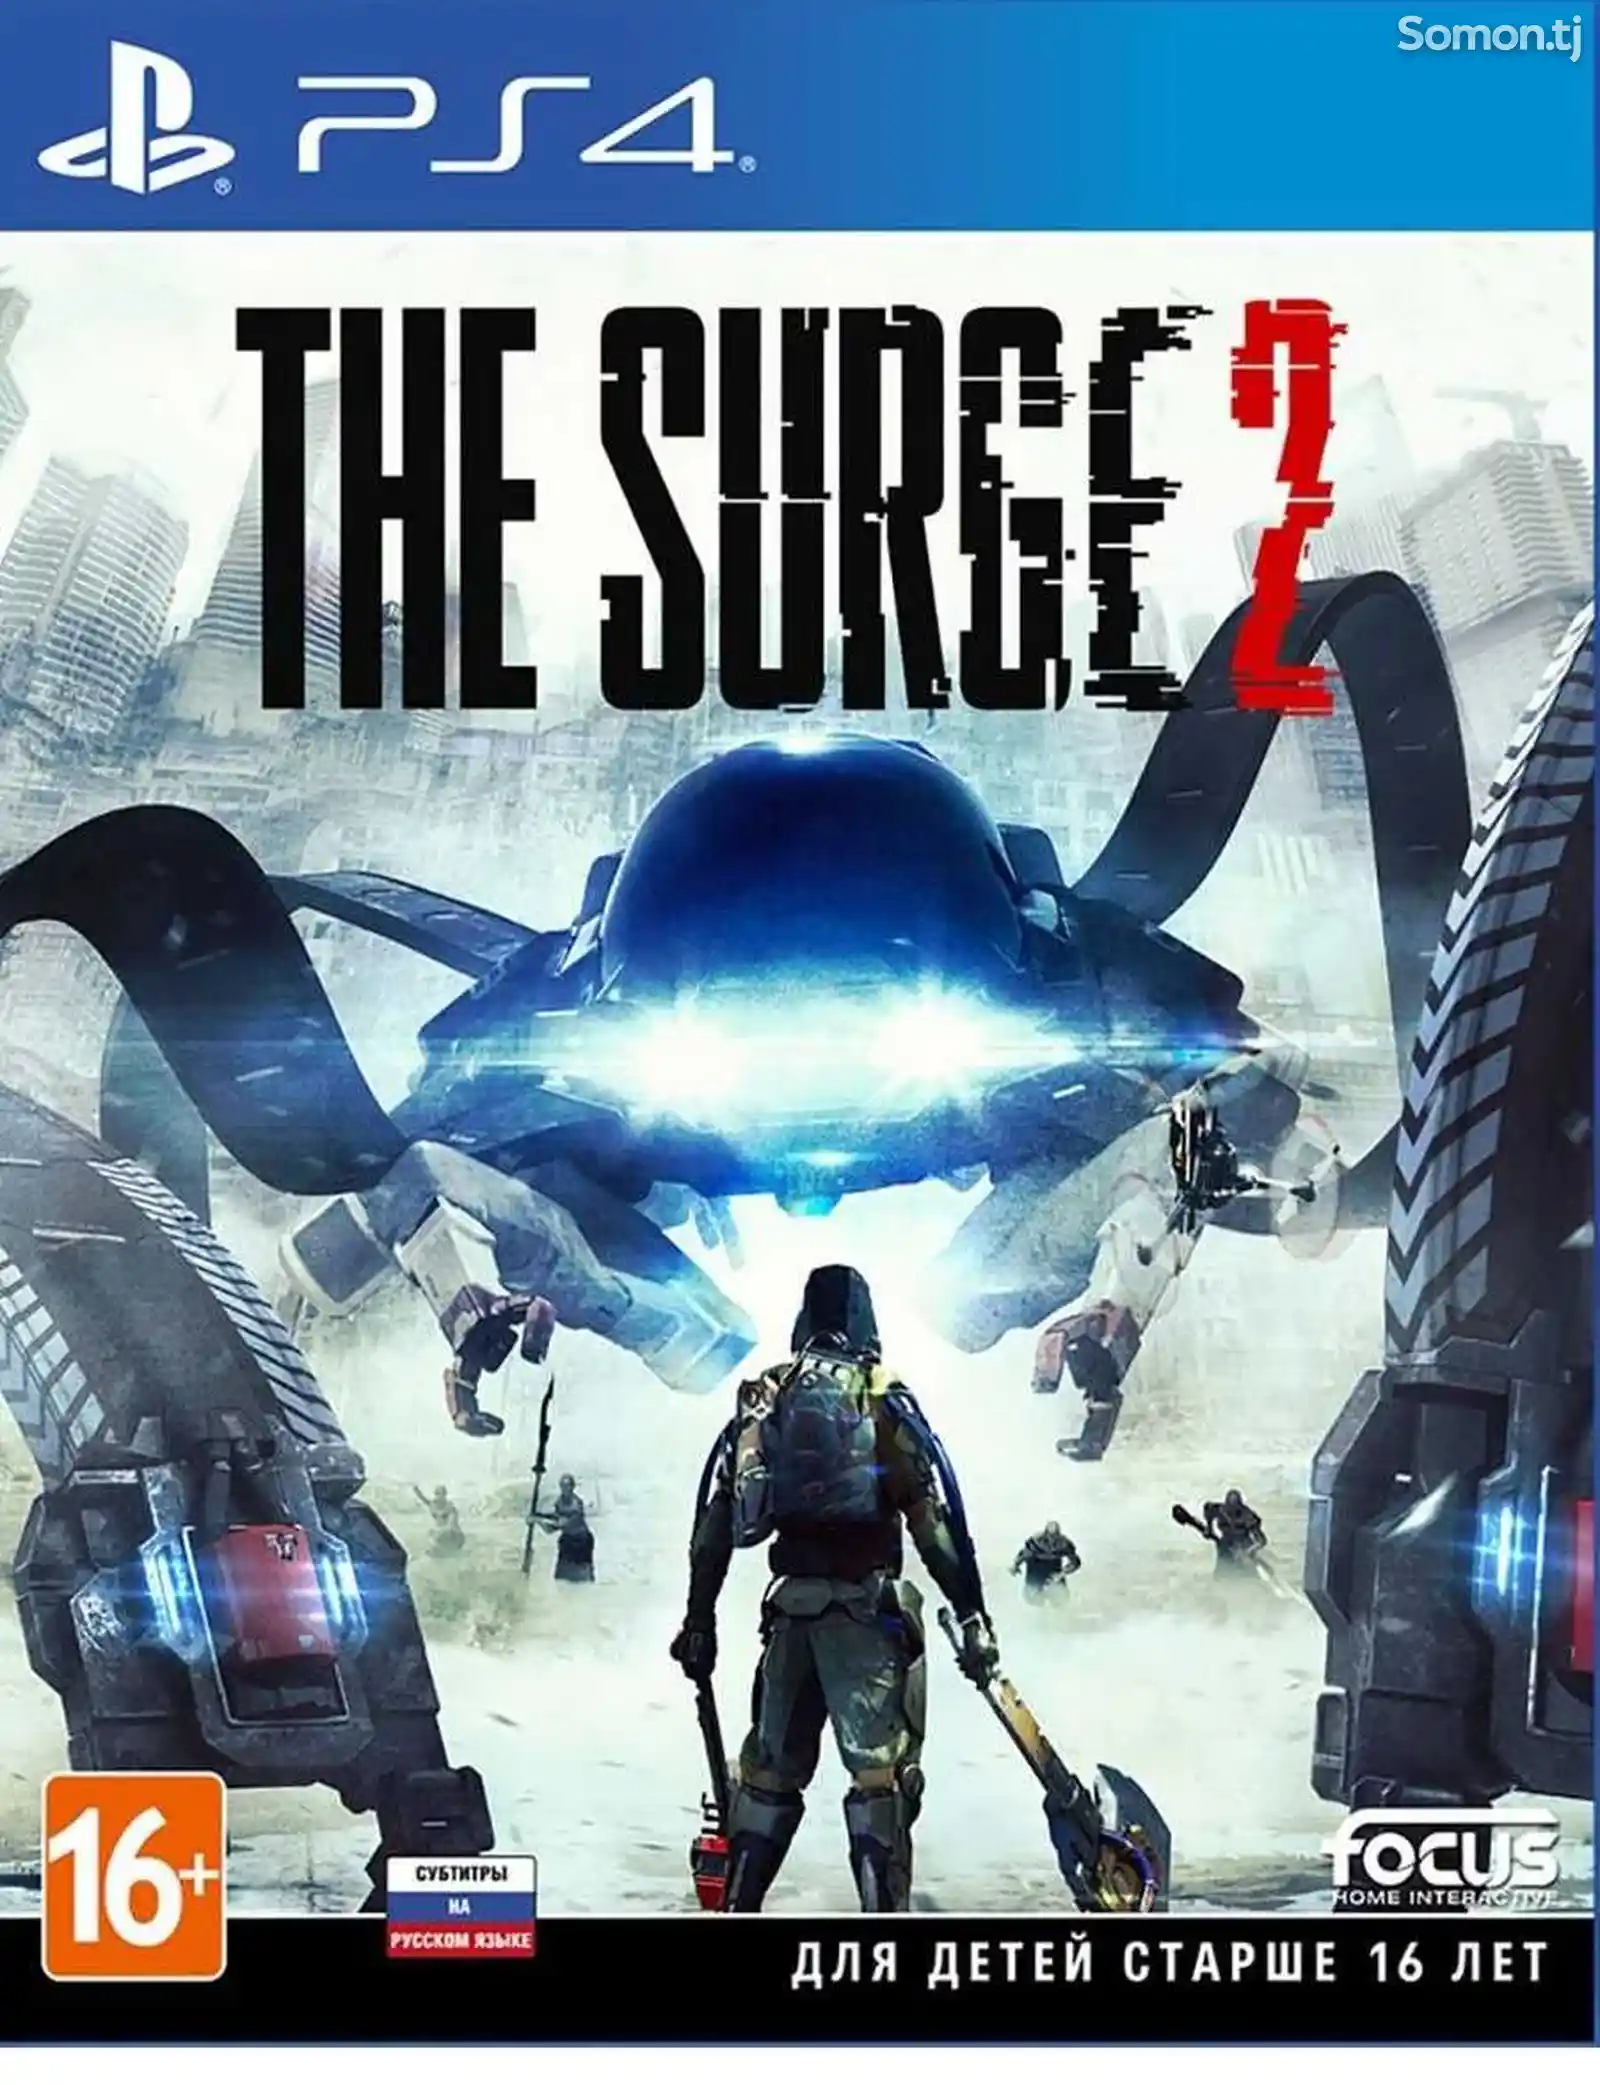 Игра The surge 2 для PS-4 / 5.05 / 6.72 / 7.02 / 7.55 / 9.00 /-1